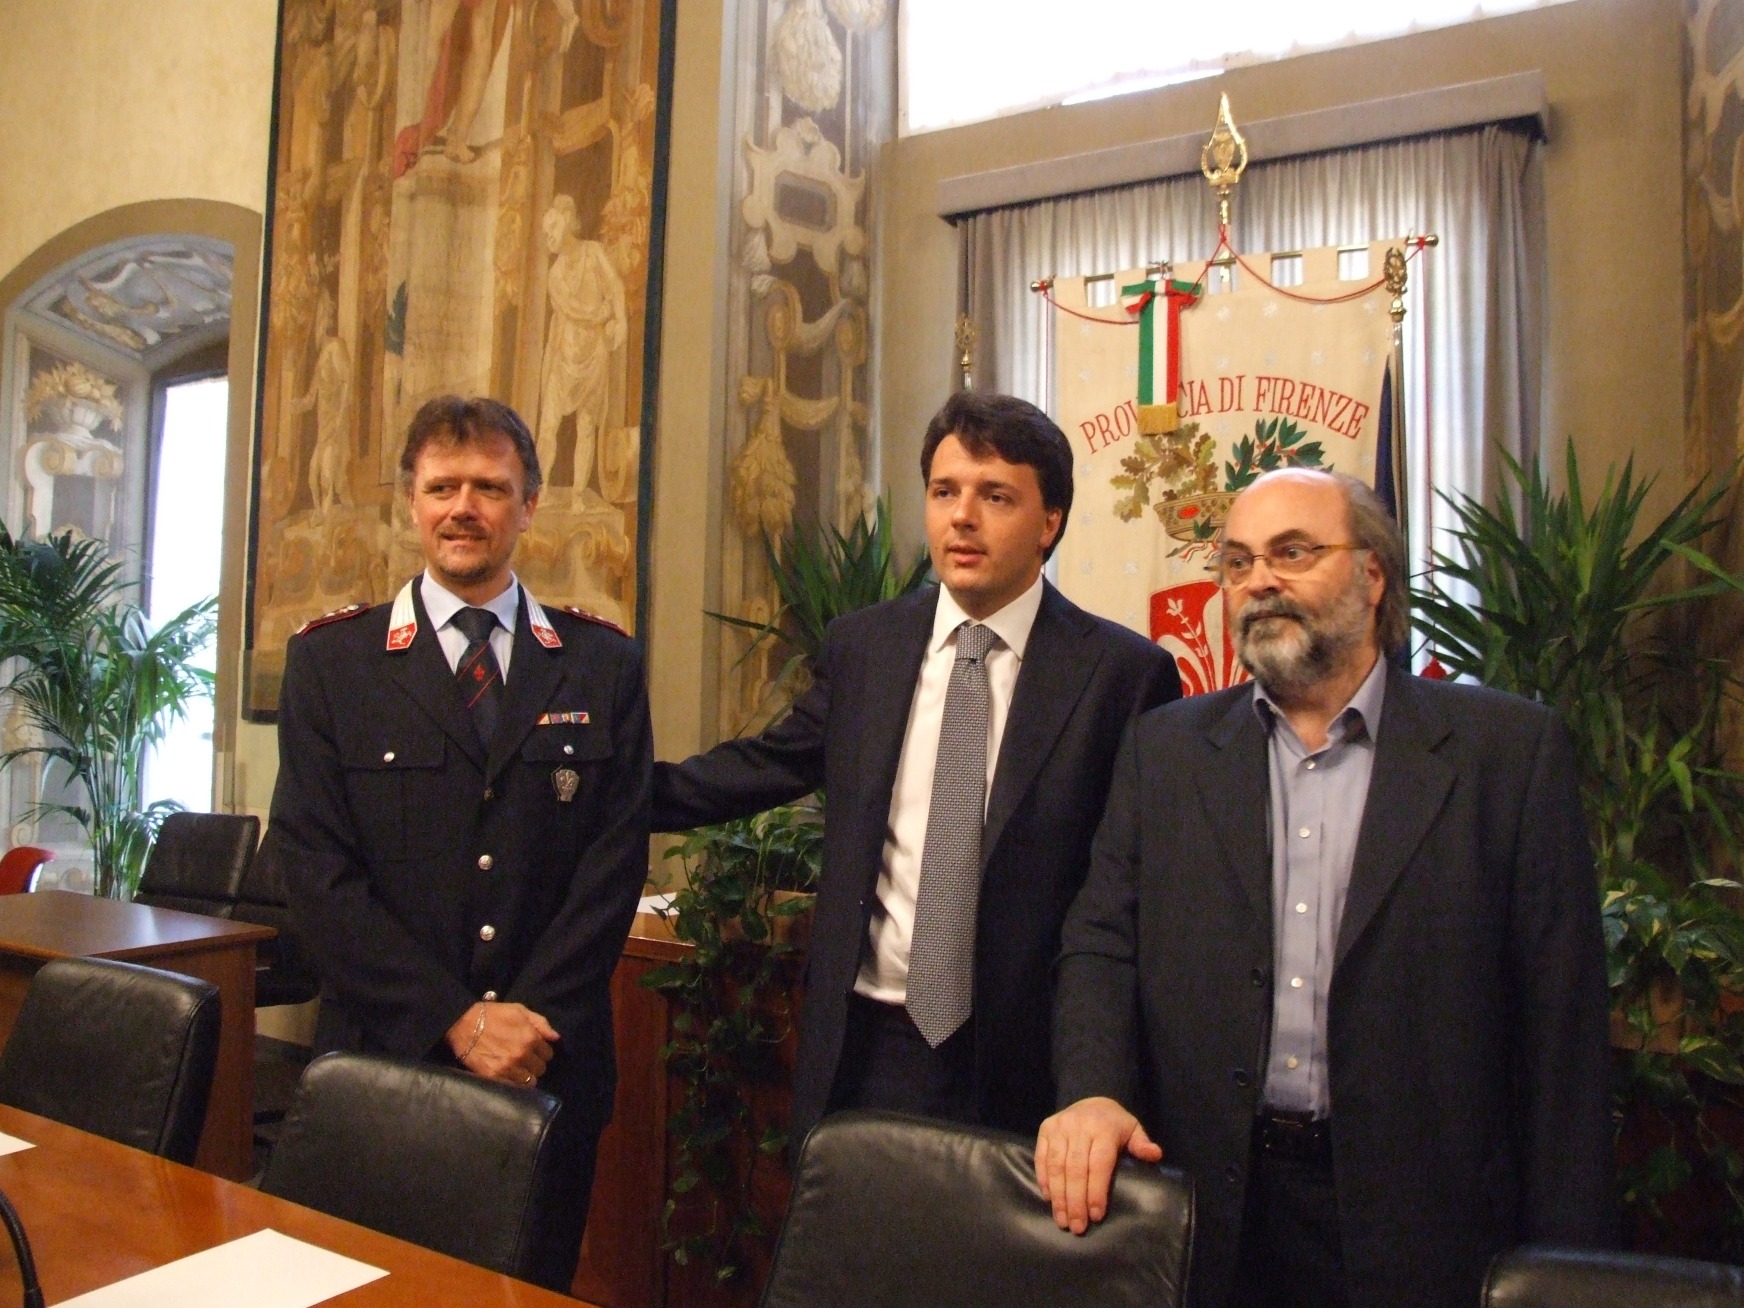 Da sinistra: Bartolini, Renzi, Cioni